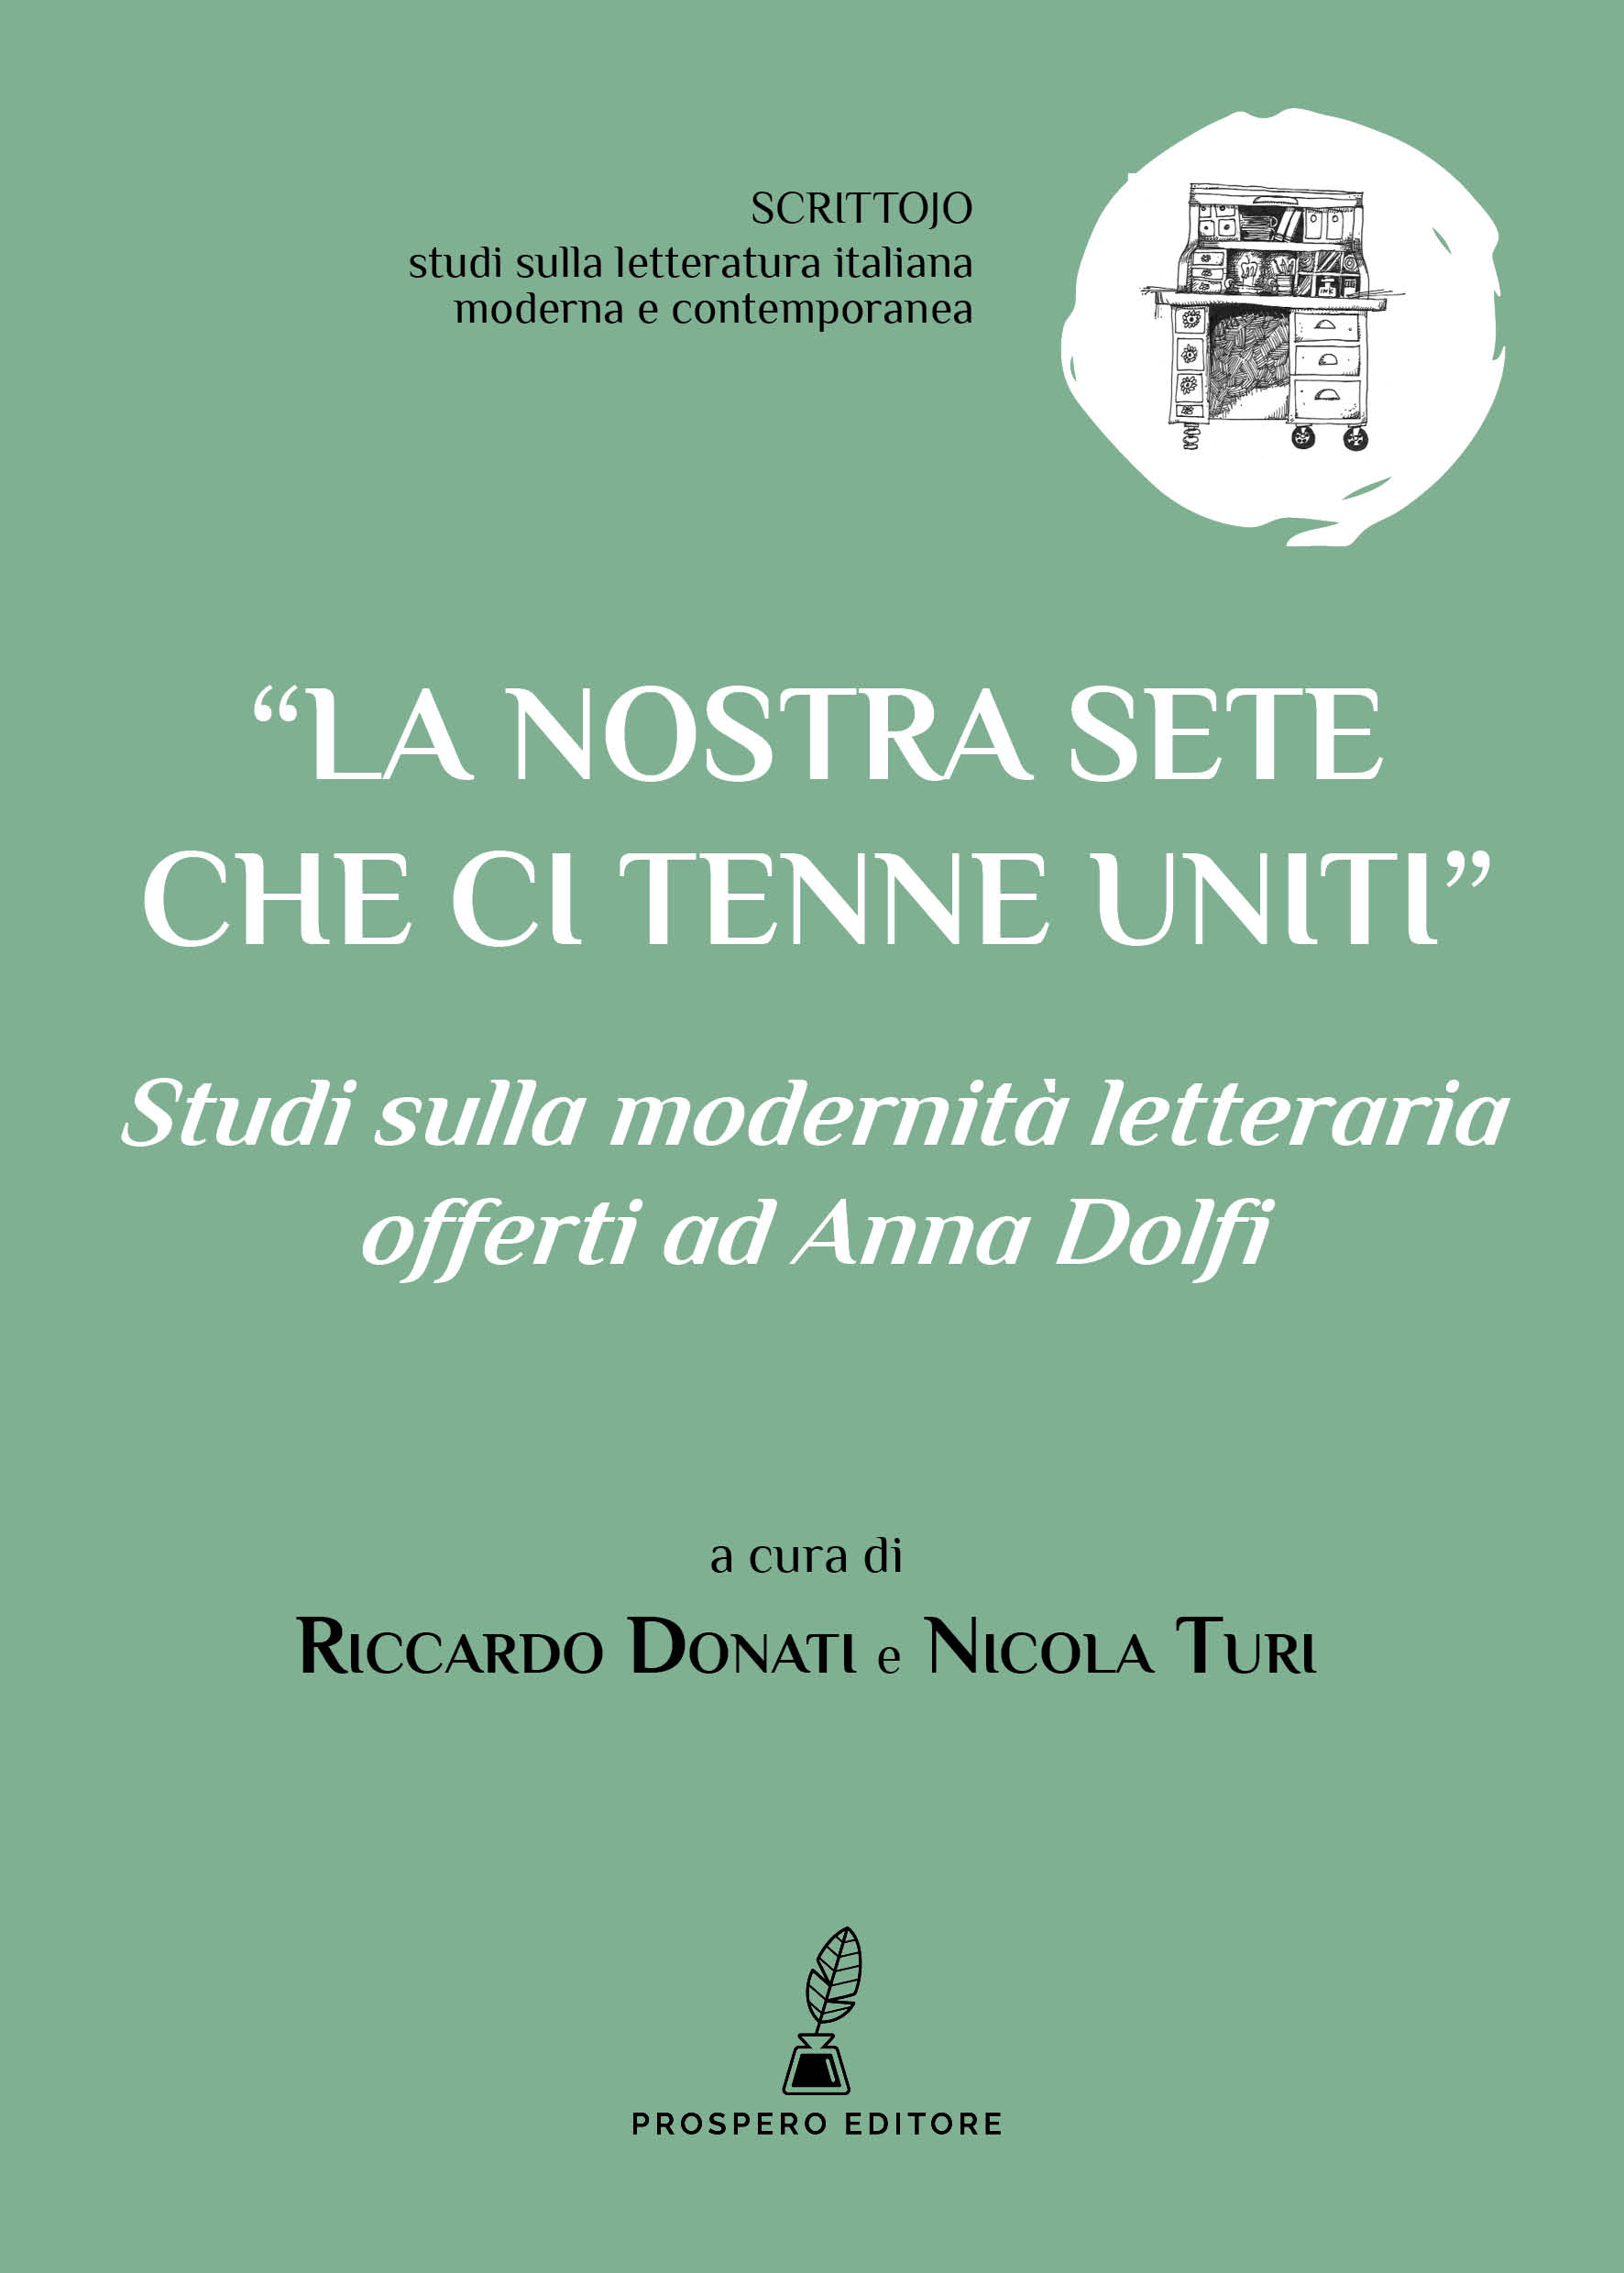 Letteratura italiana - Home